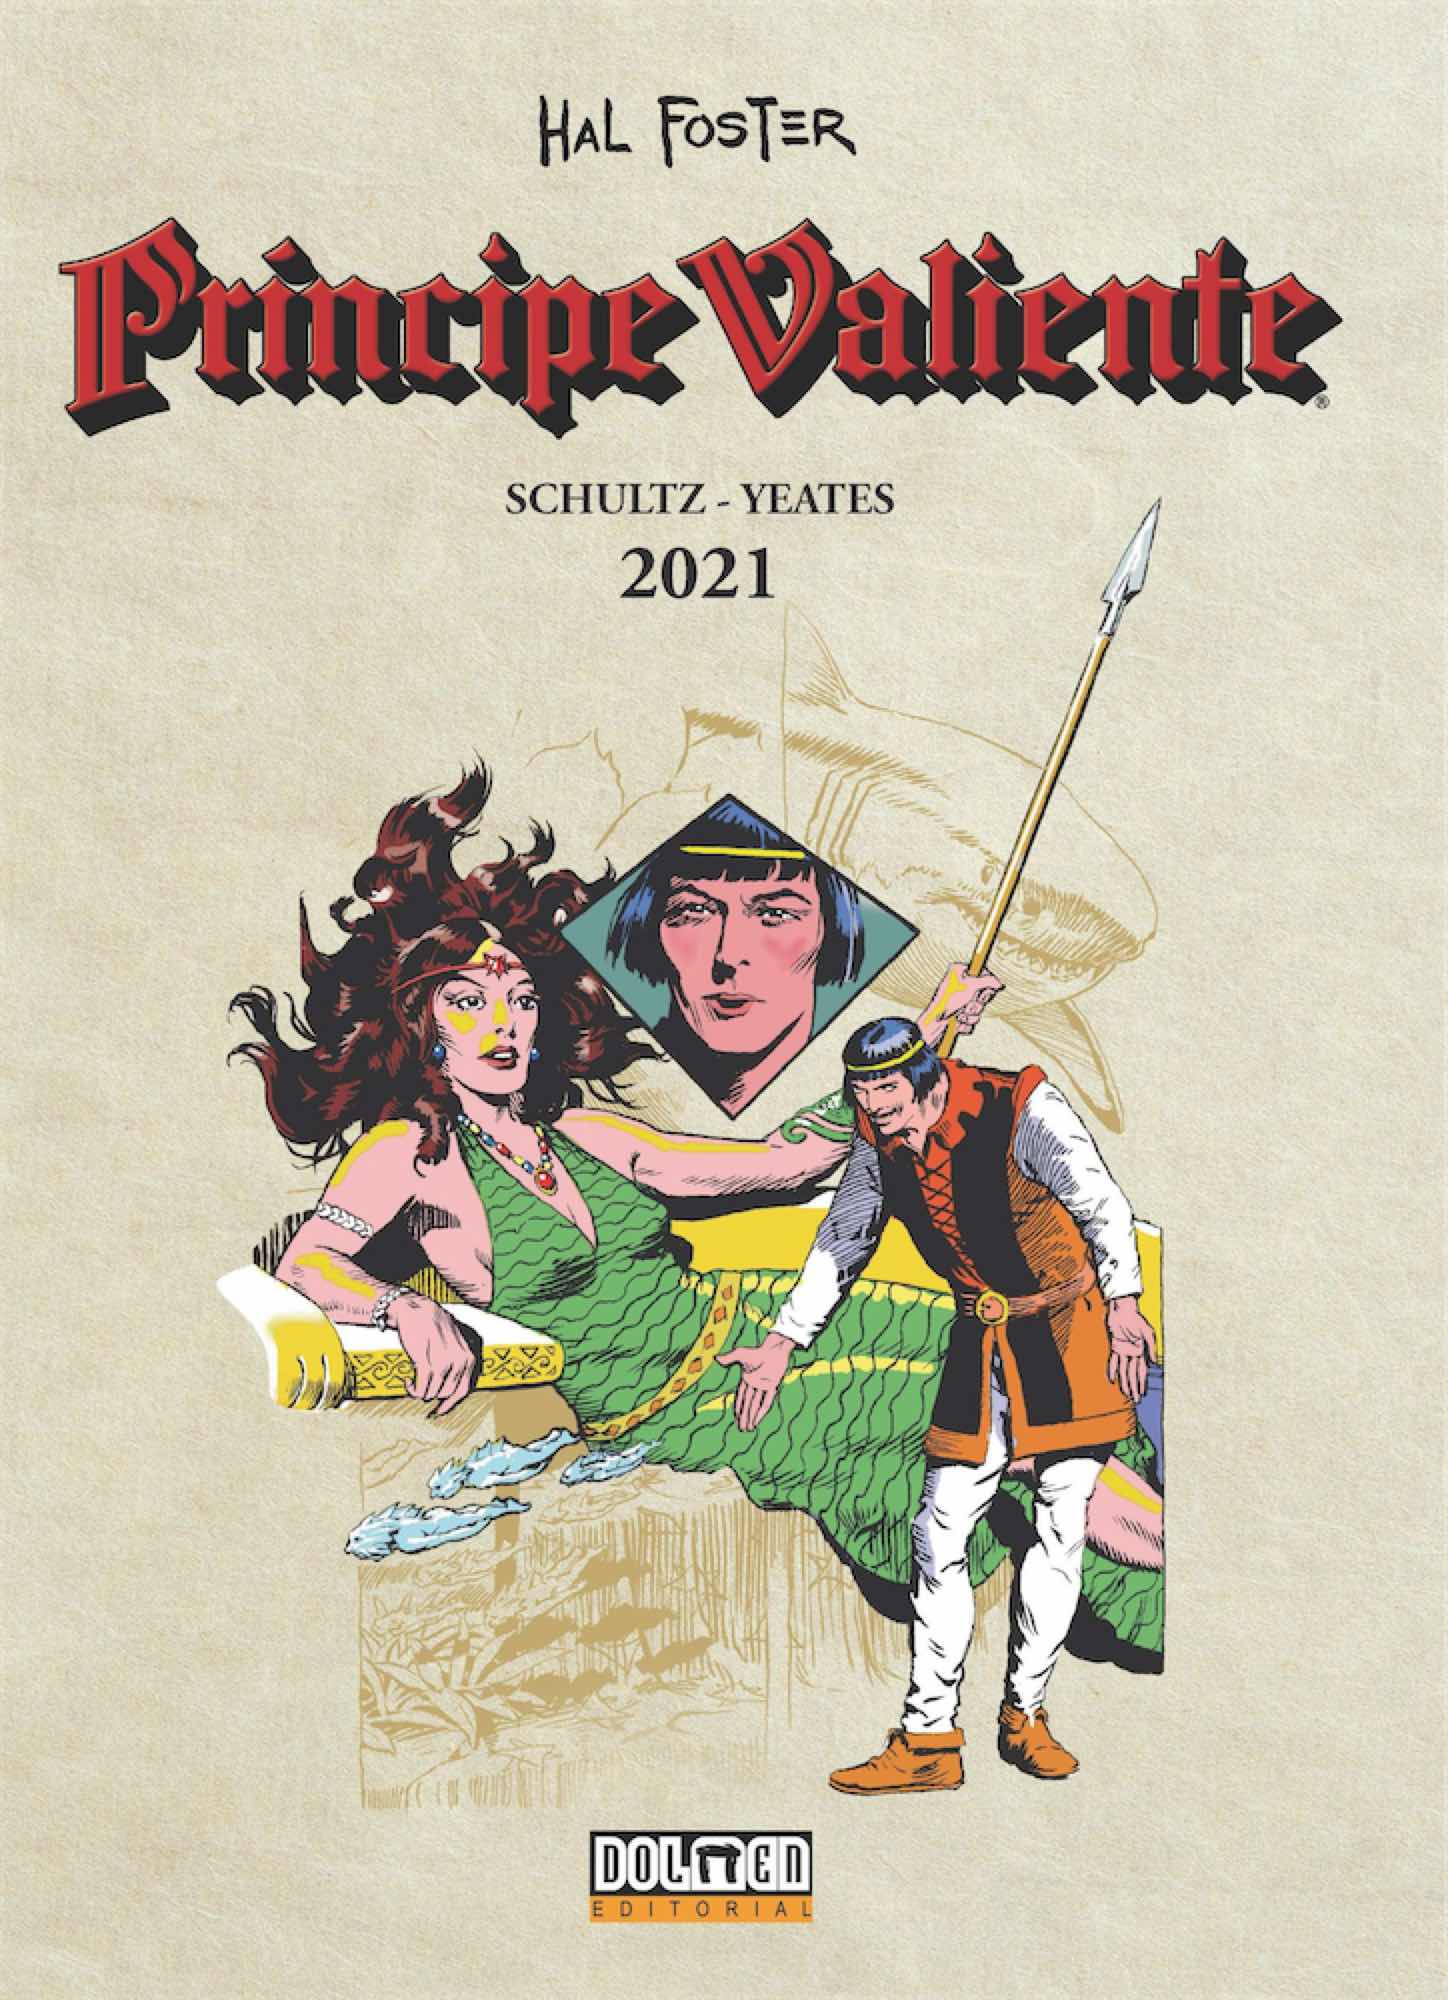 PRINCIPE VALIENTE 2021